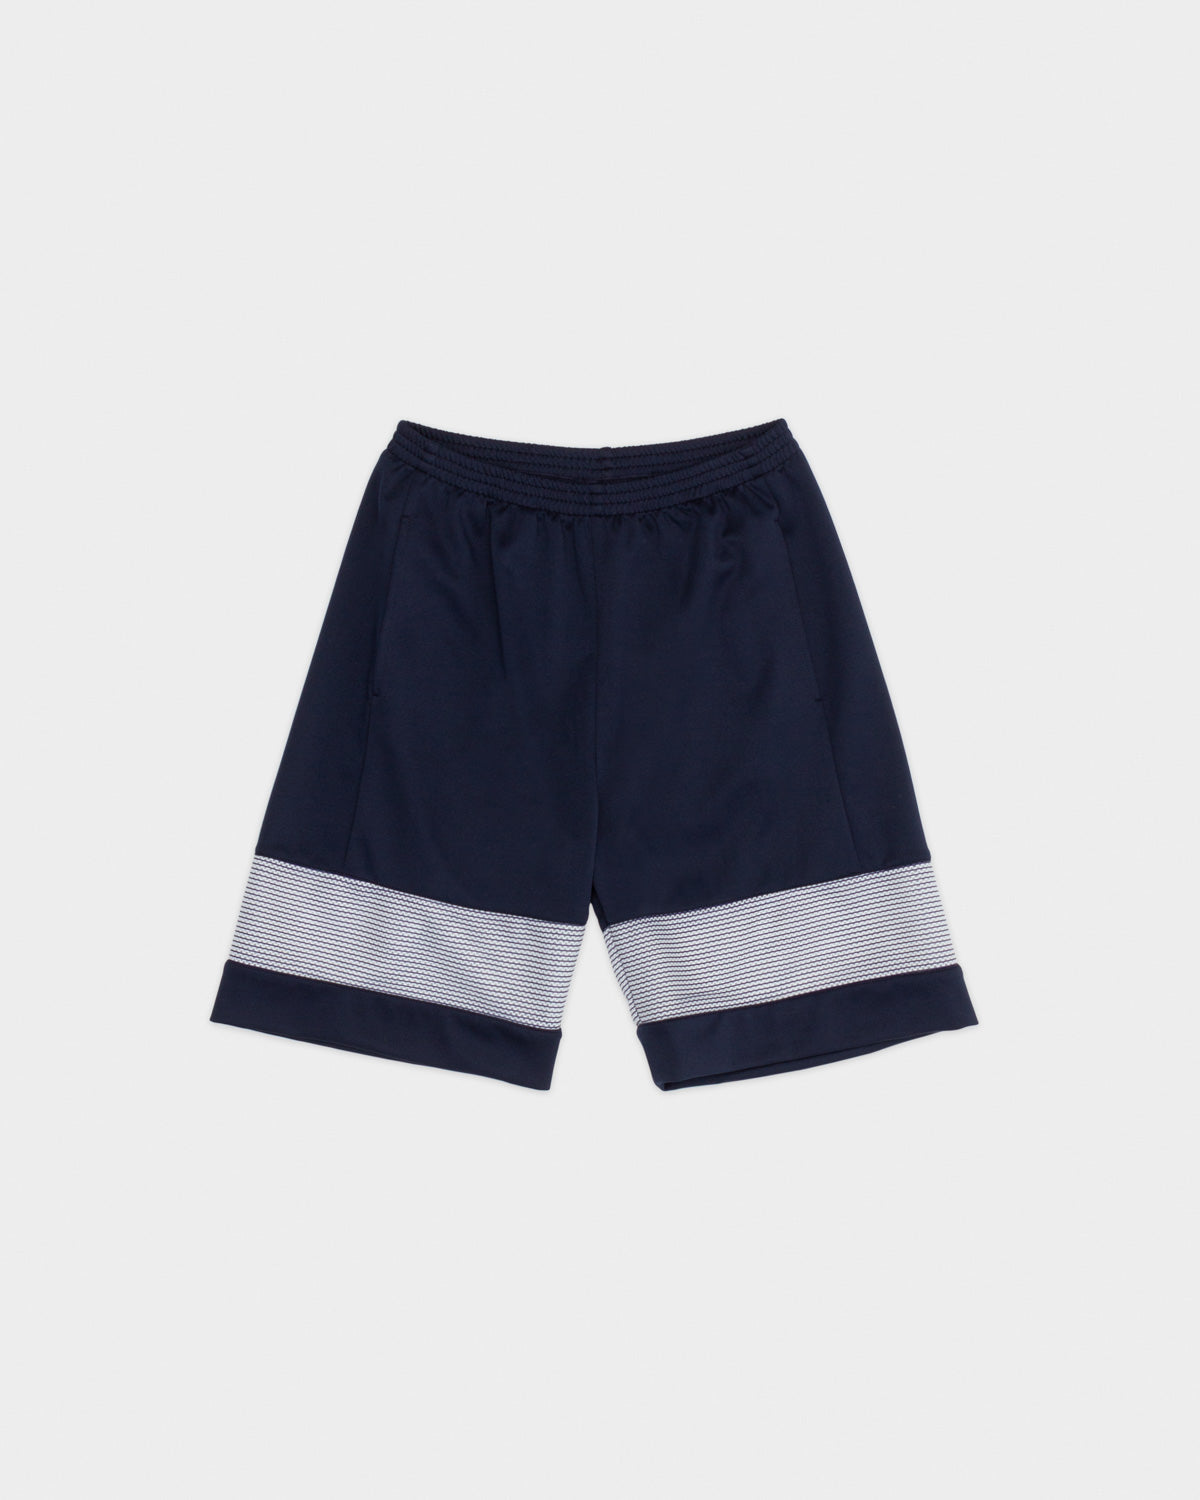 Navy Hoop Shorts